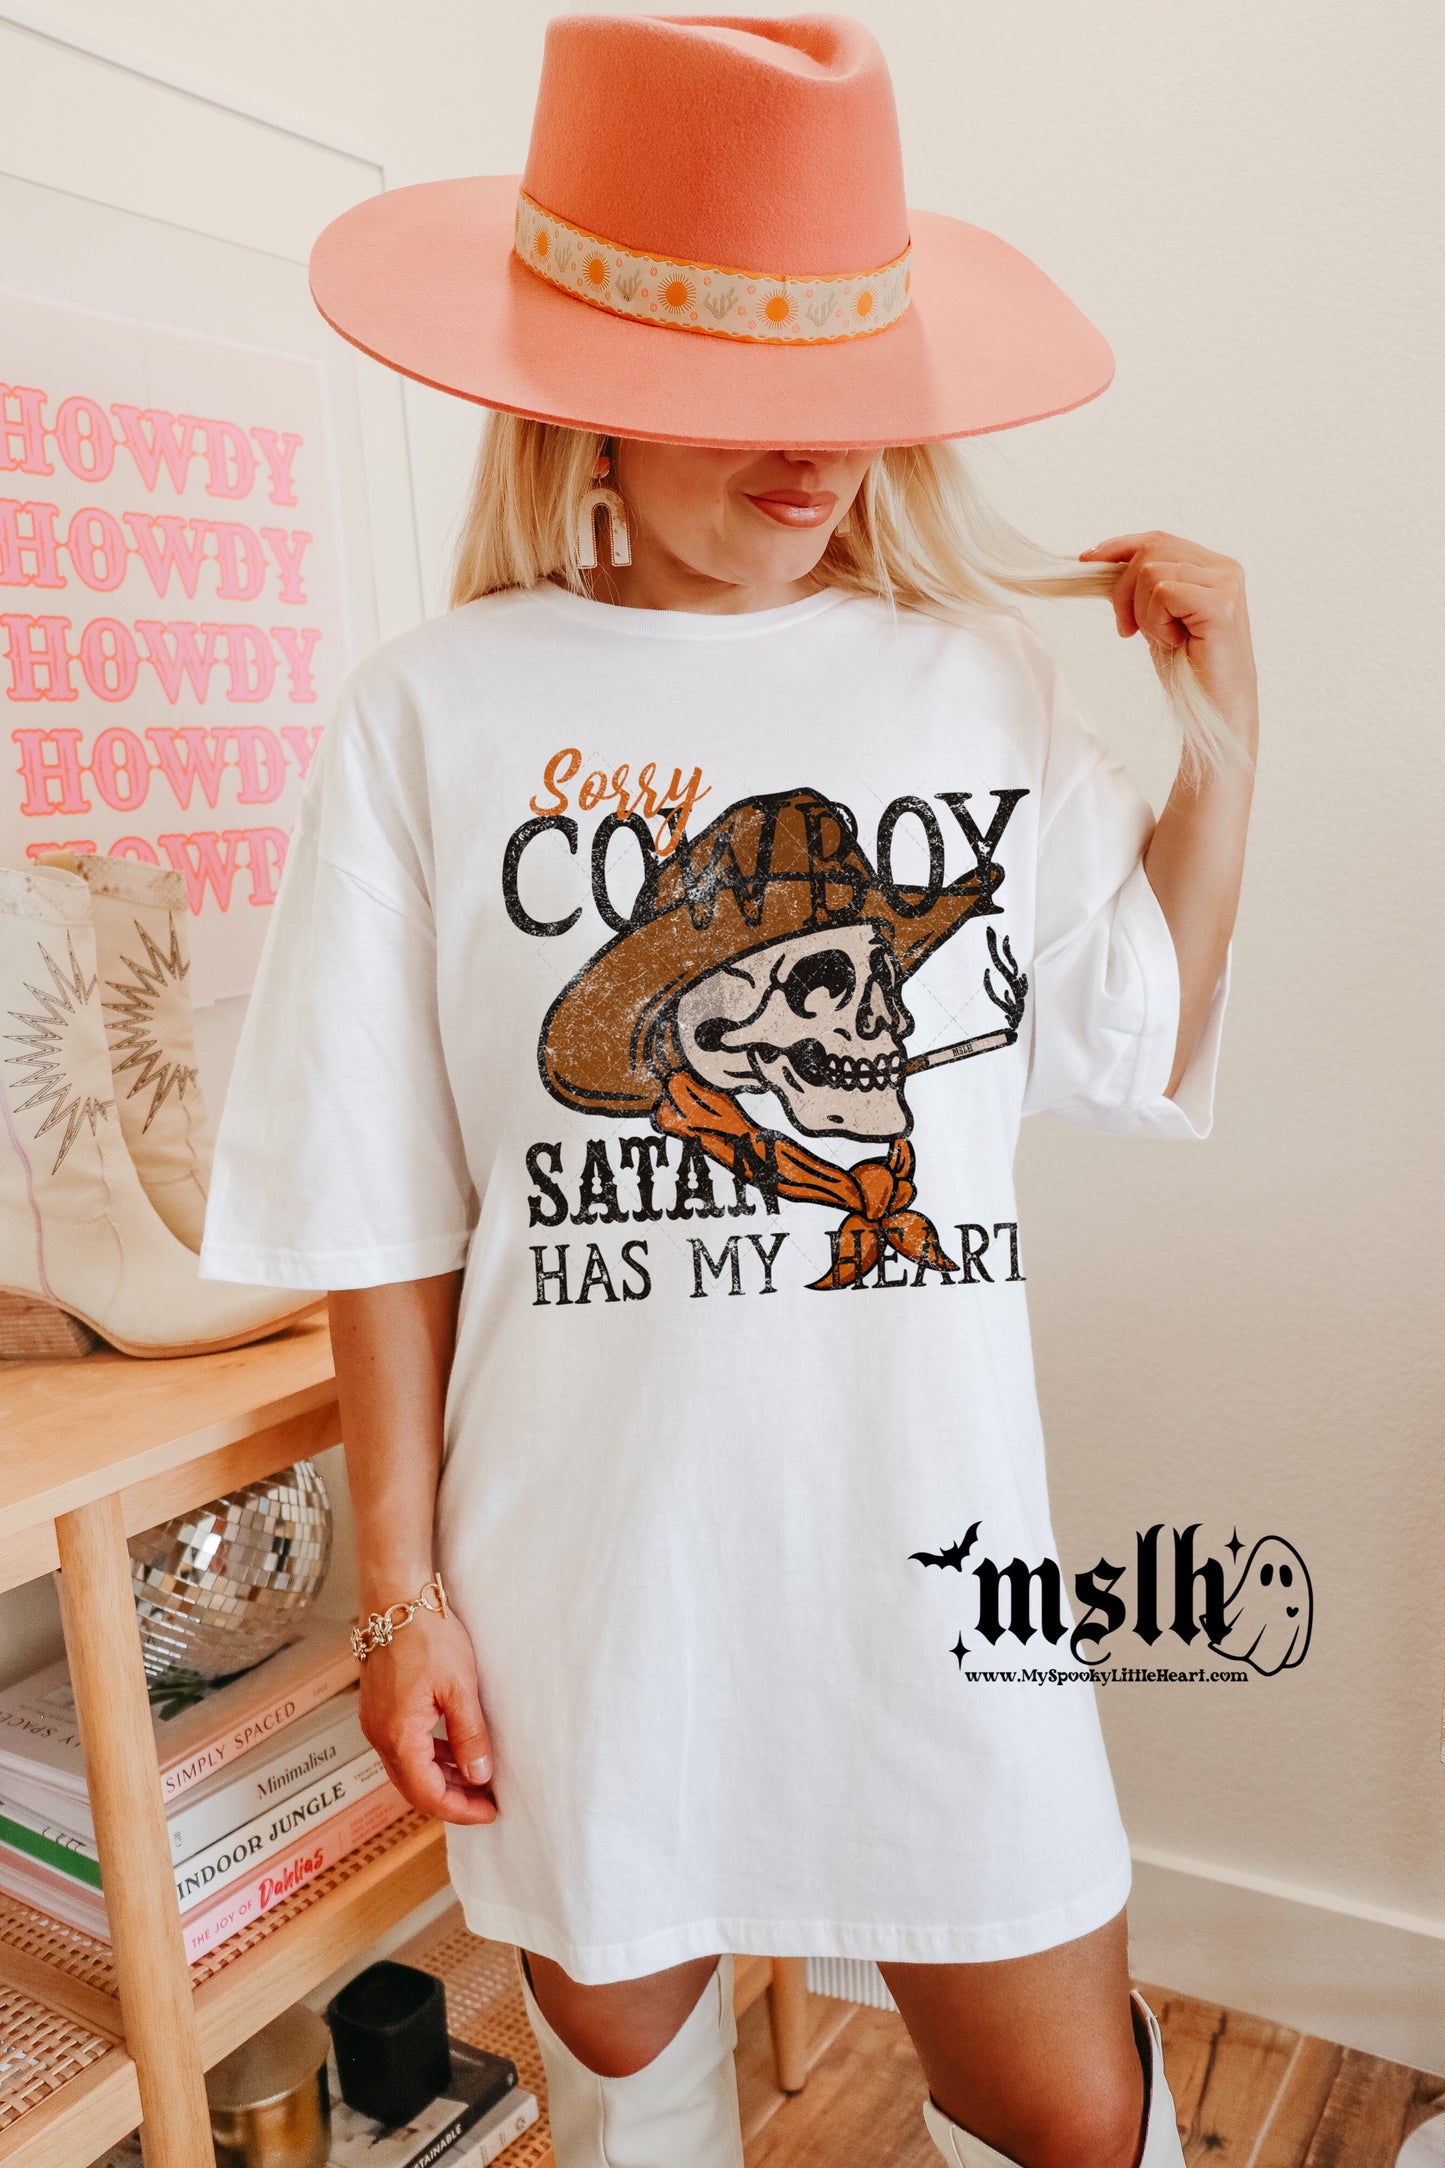 Sorry Cowboy Satan has my Heart T-Shirt